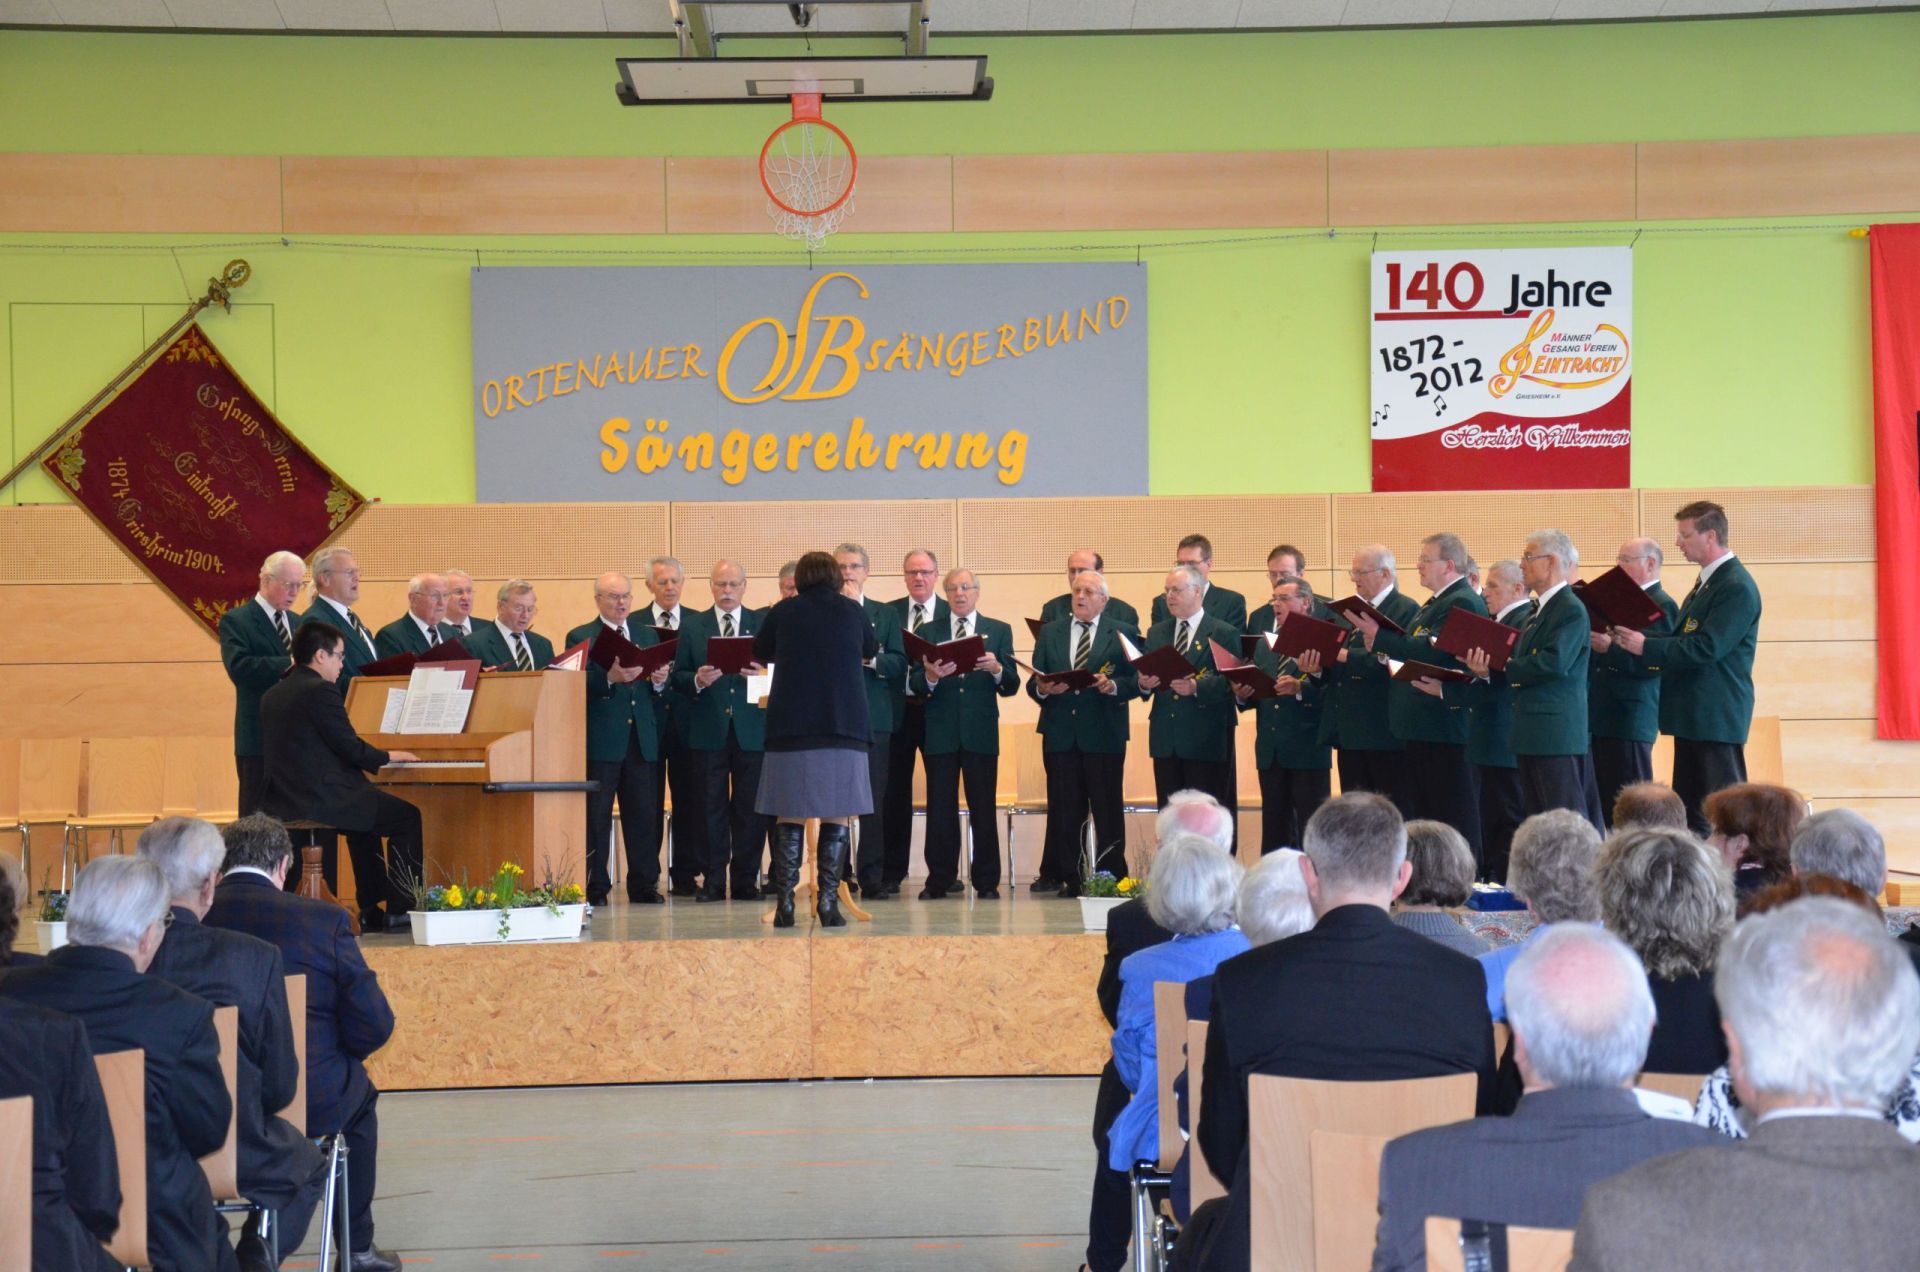 Sängerehrung Ortenauer Sängerbund 2012